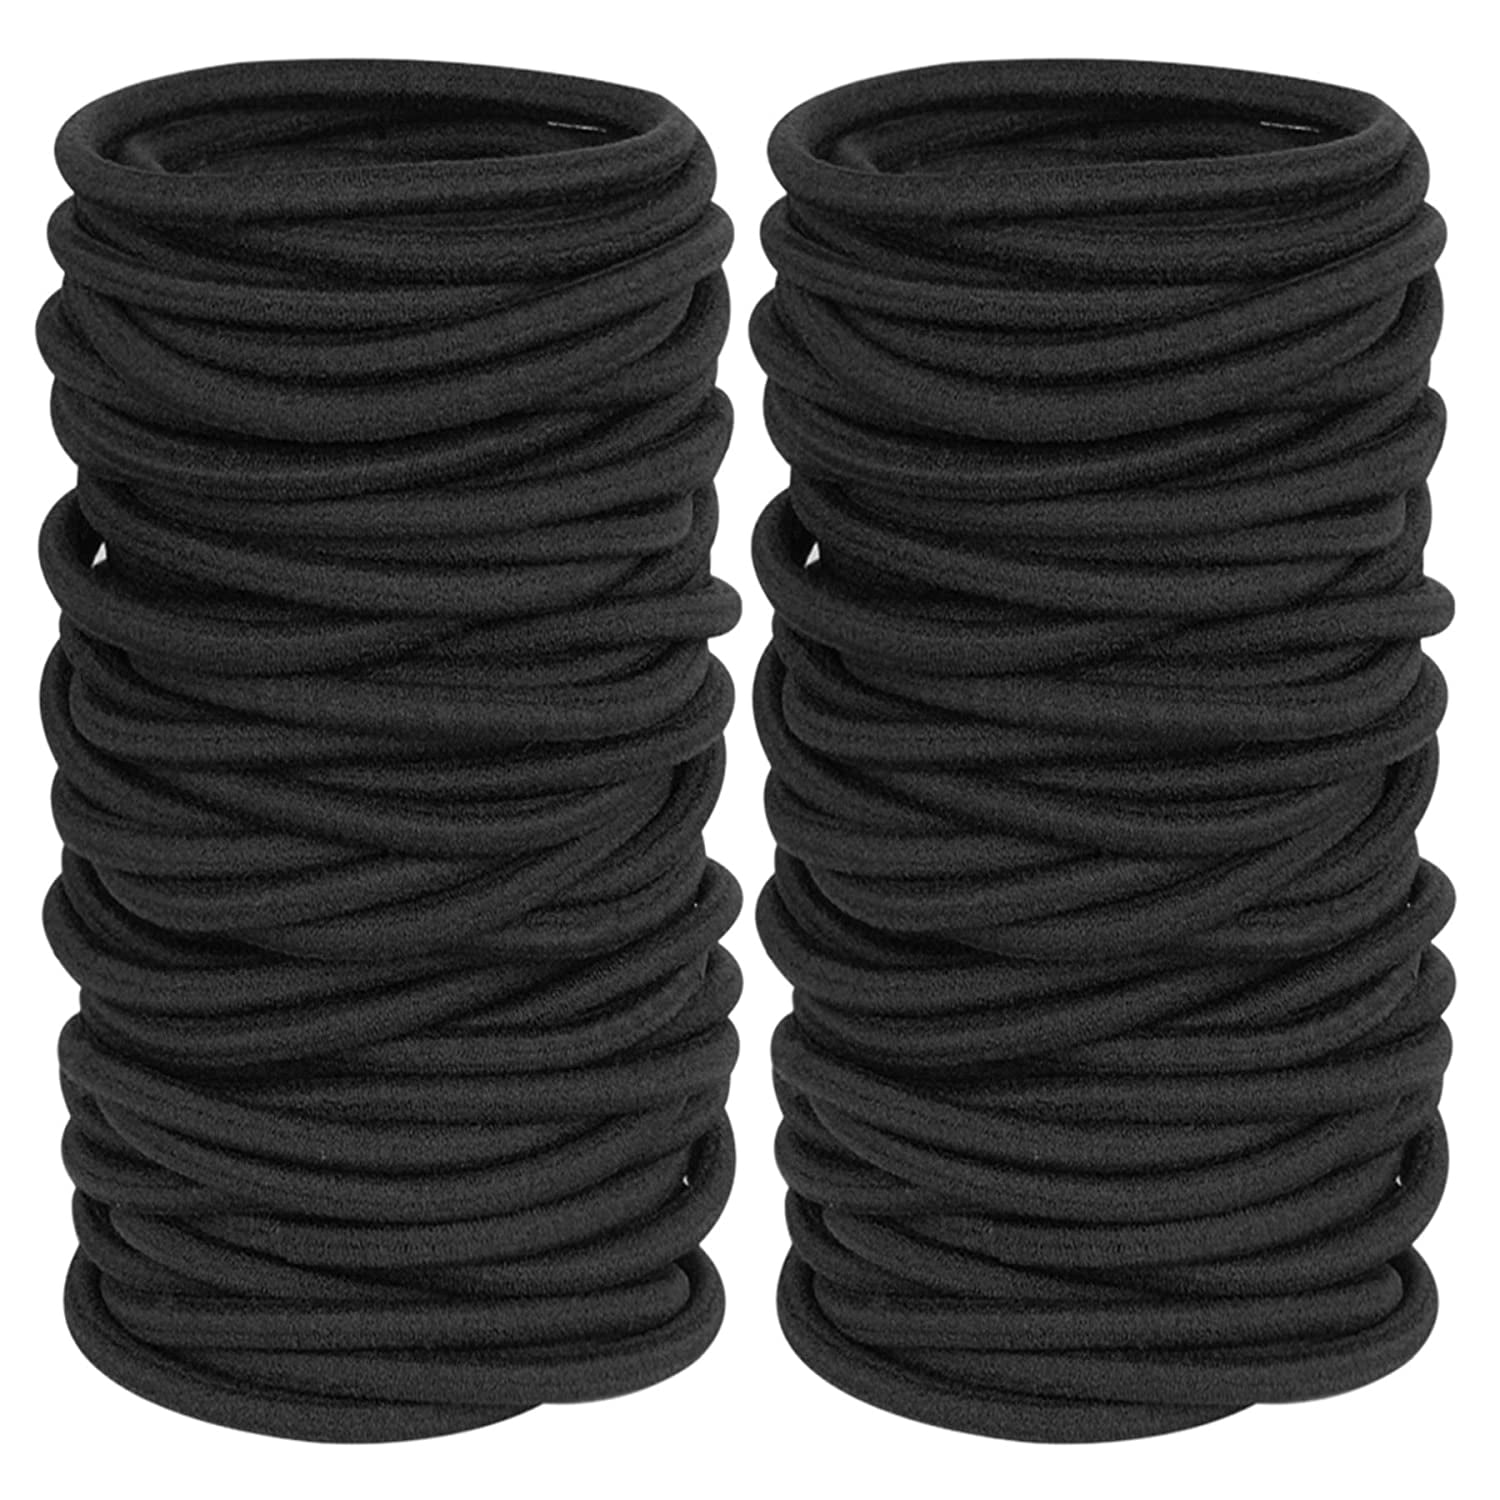 4 x Black Small Telephone Coiled Cord Scrunchie Hair Elastics Band Elasticated 